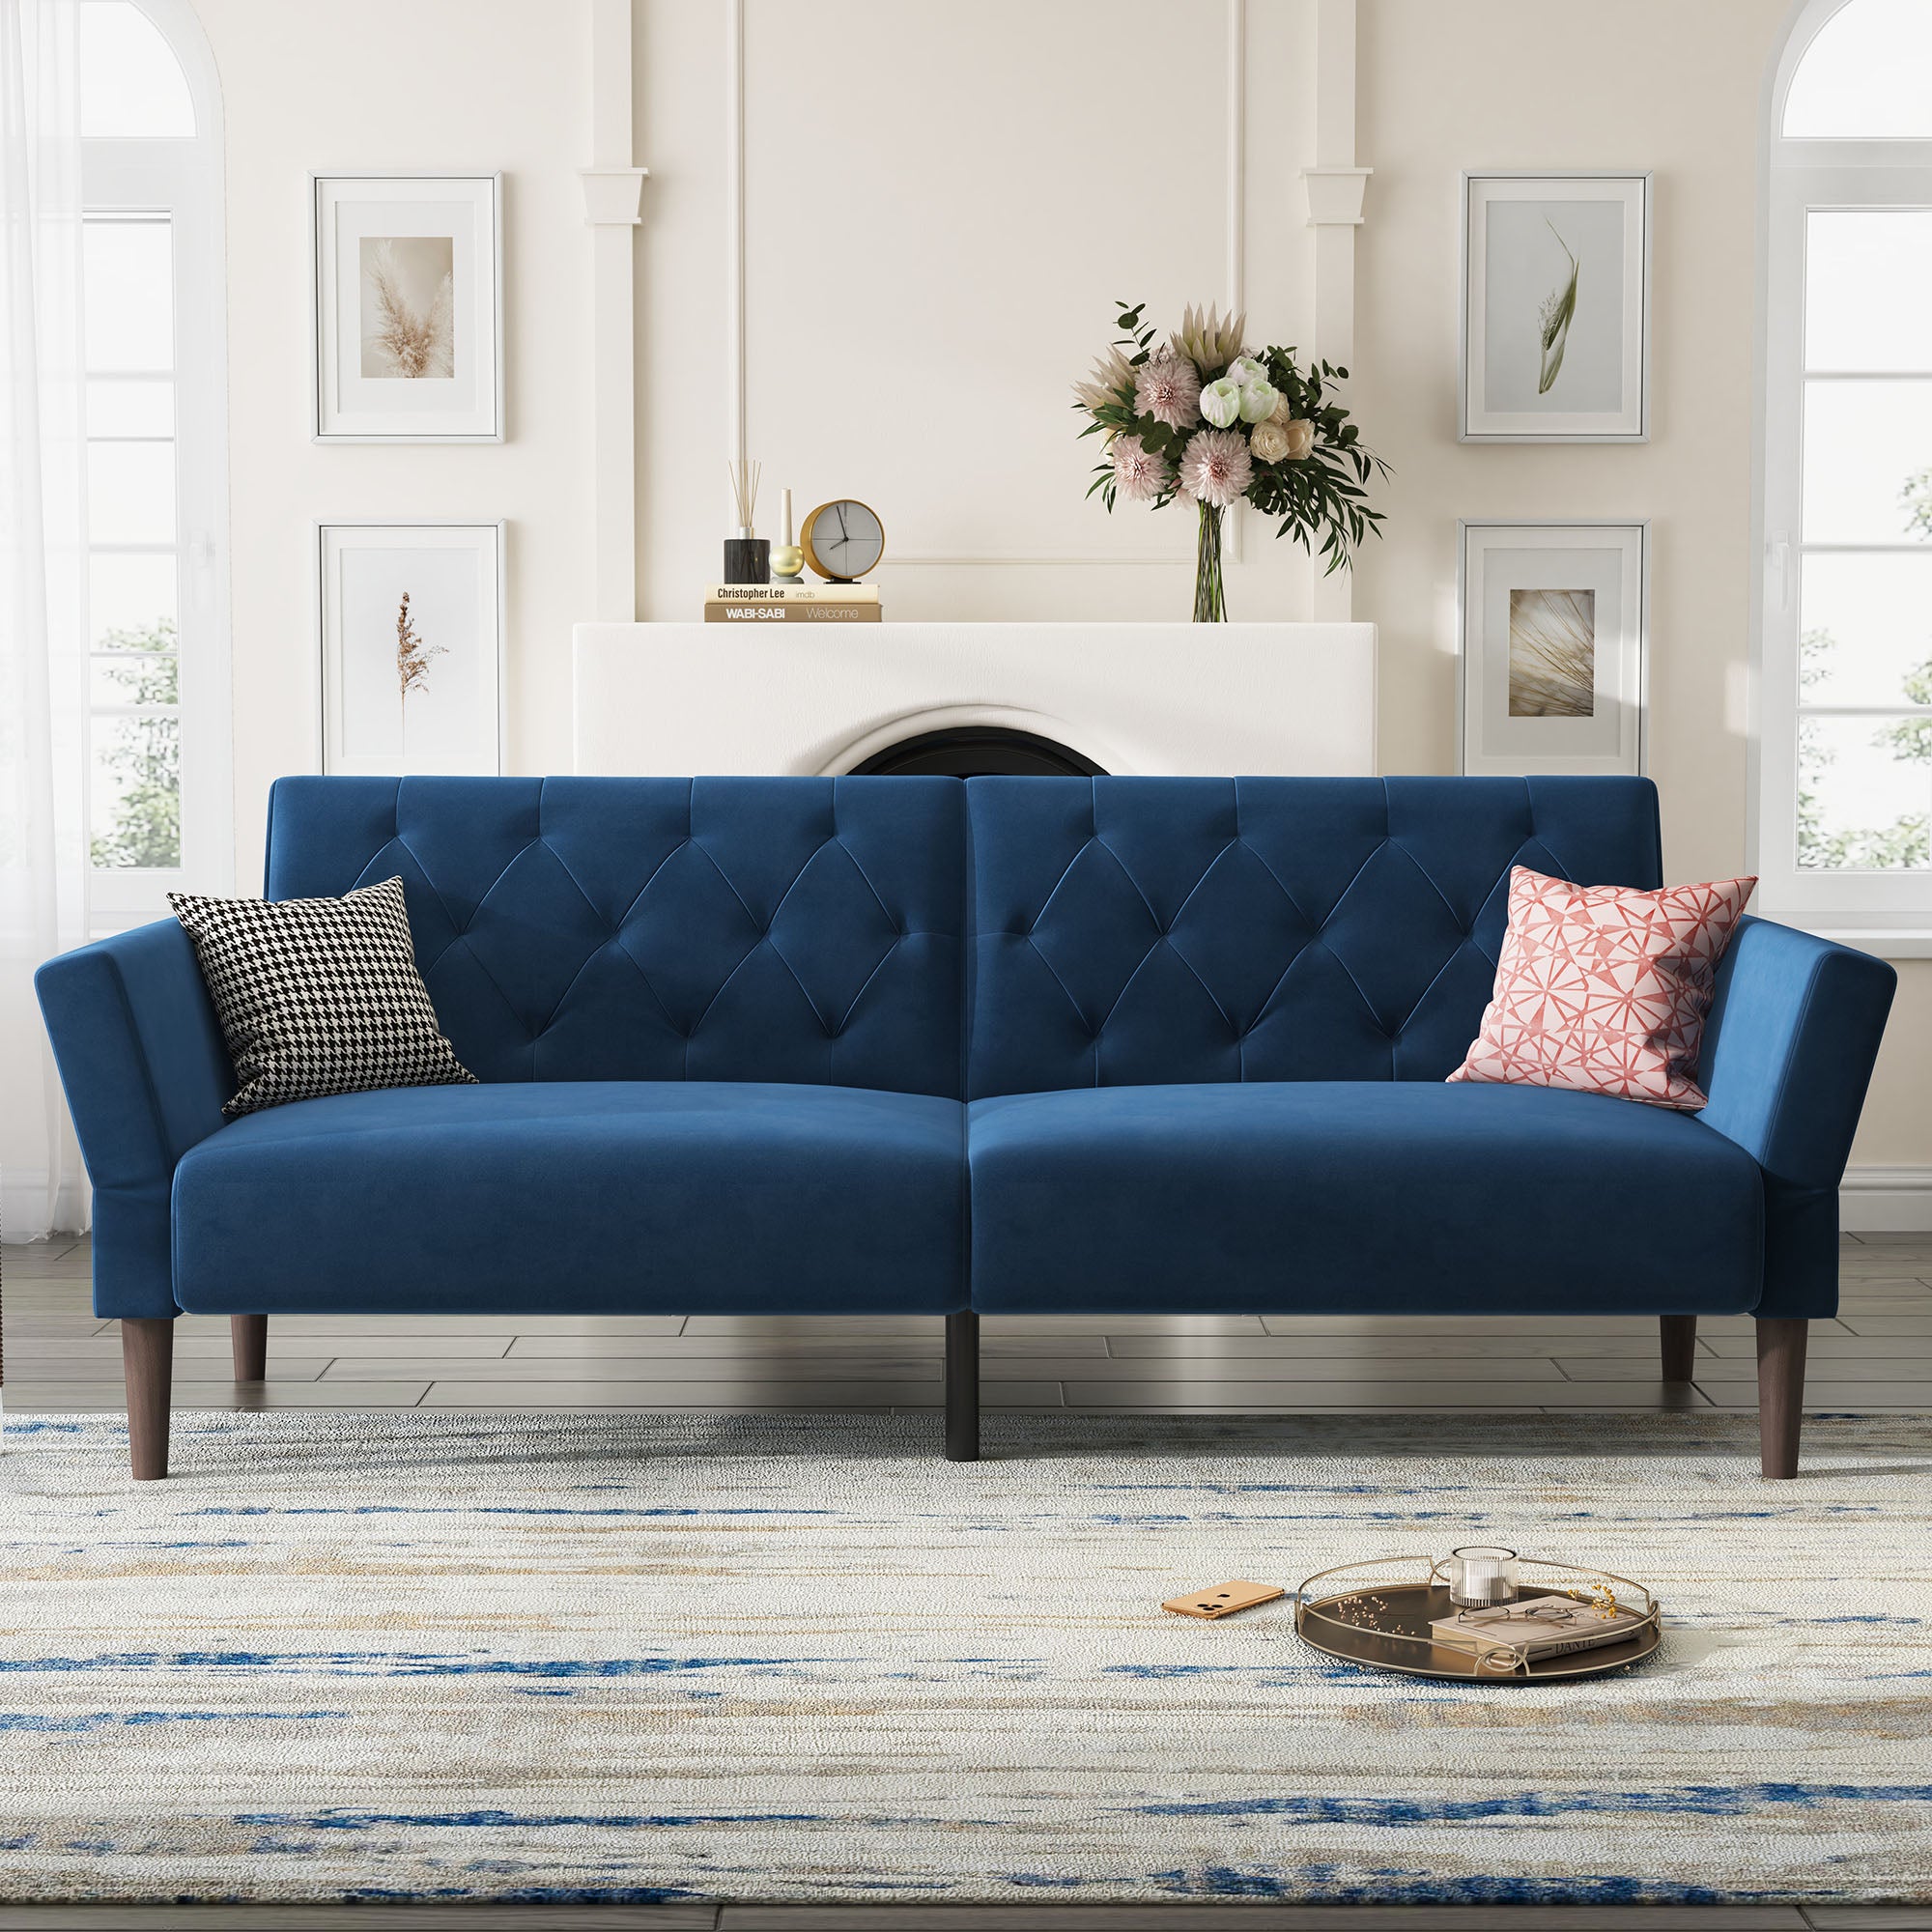 HONBAY Dark Blue Velvet Convertible Futon Sofa Bed with Diamond Tufted Back and Adjustable Armrests